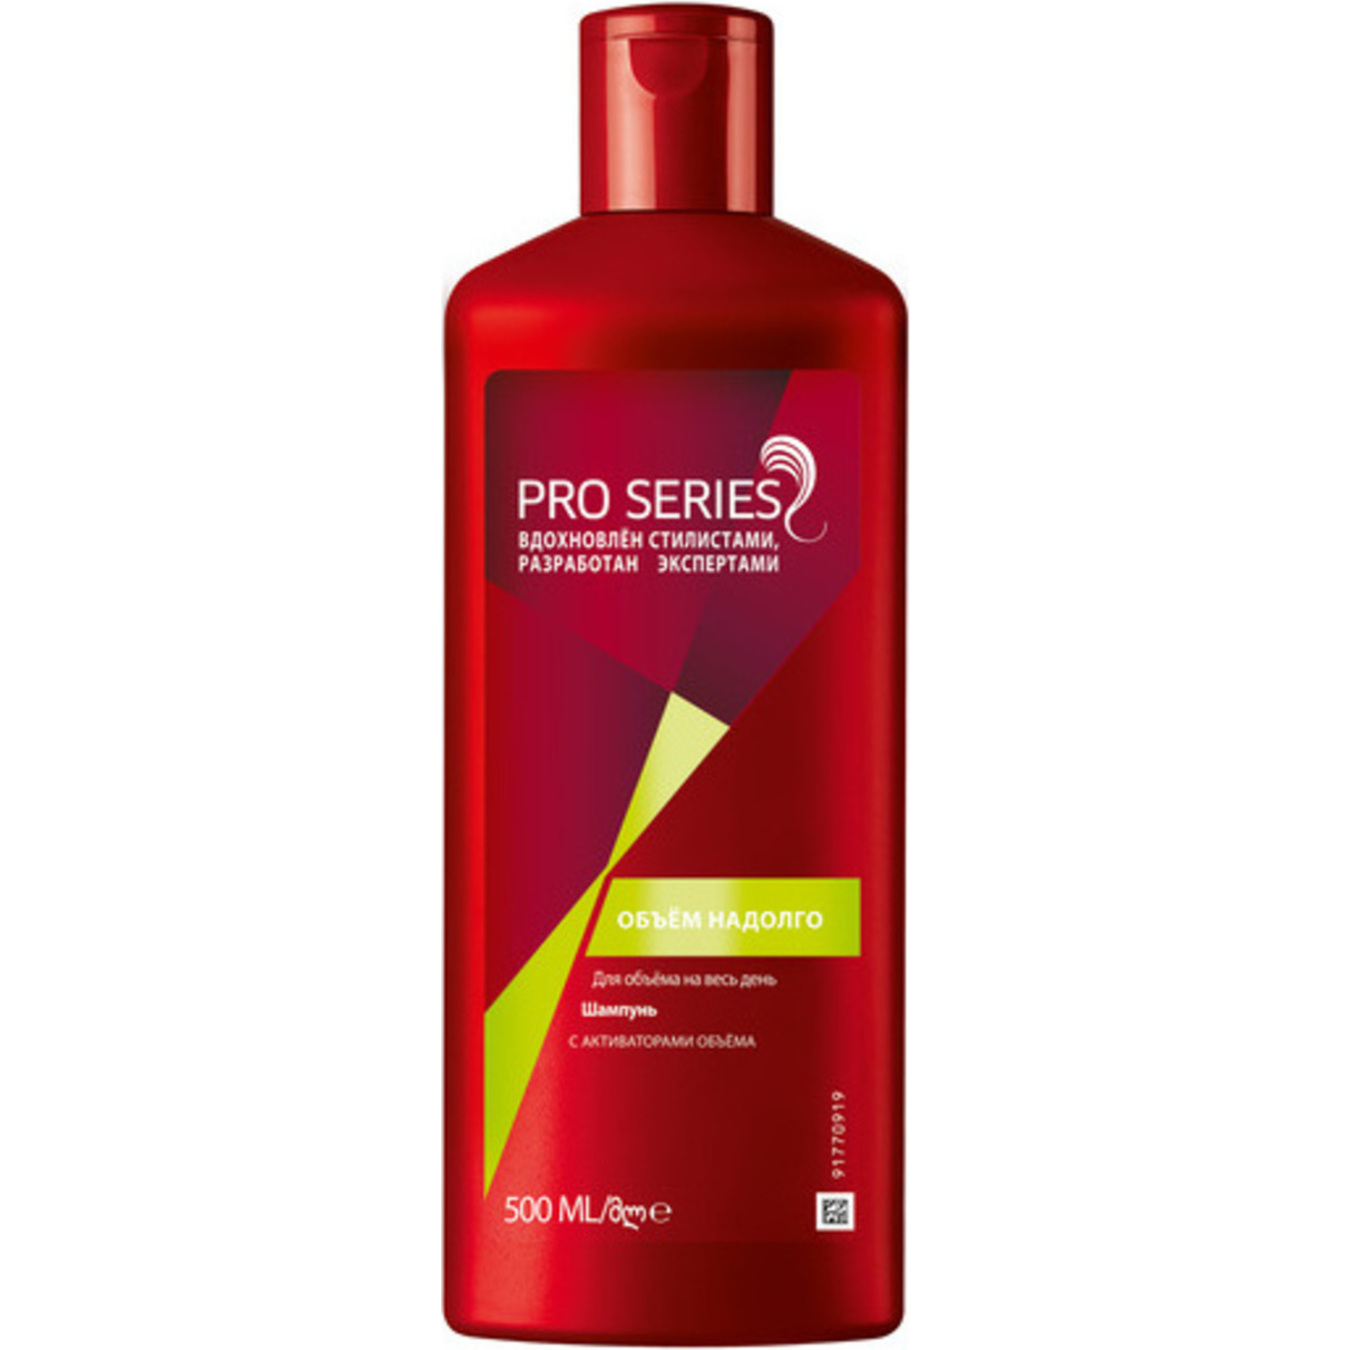 Shampoo Pro Series Long-lasting volume 500 ml